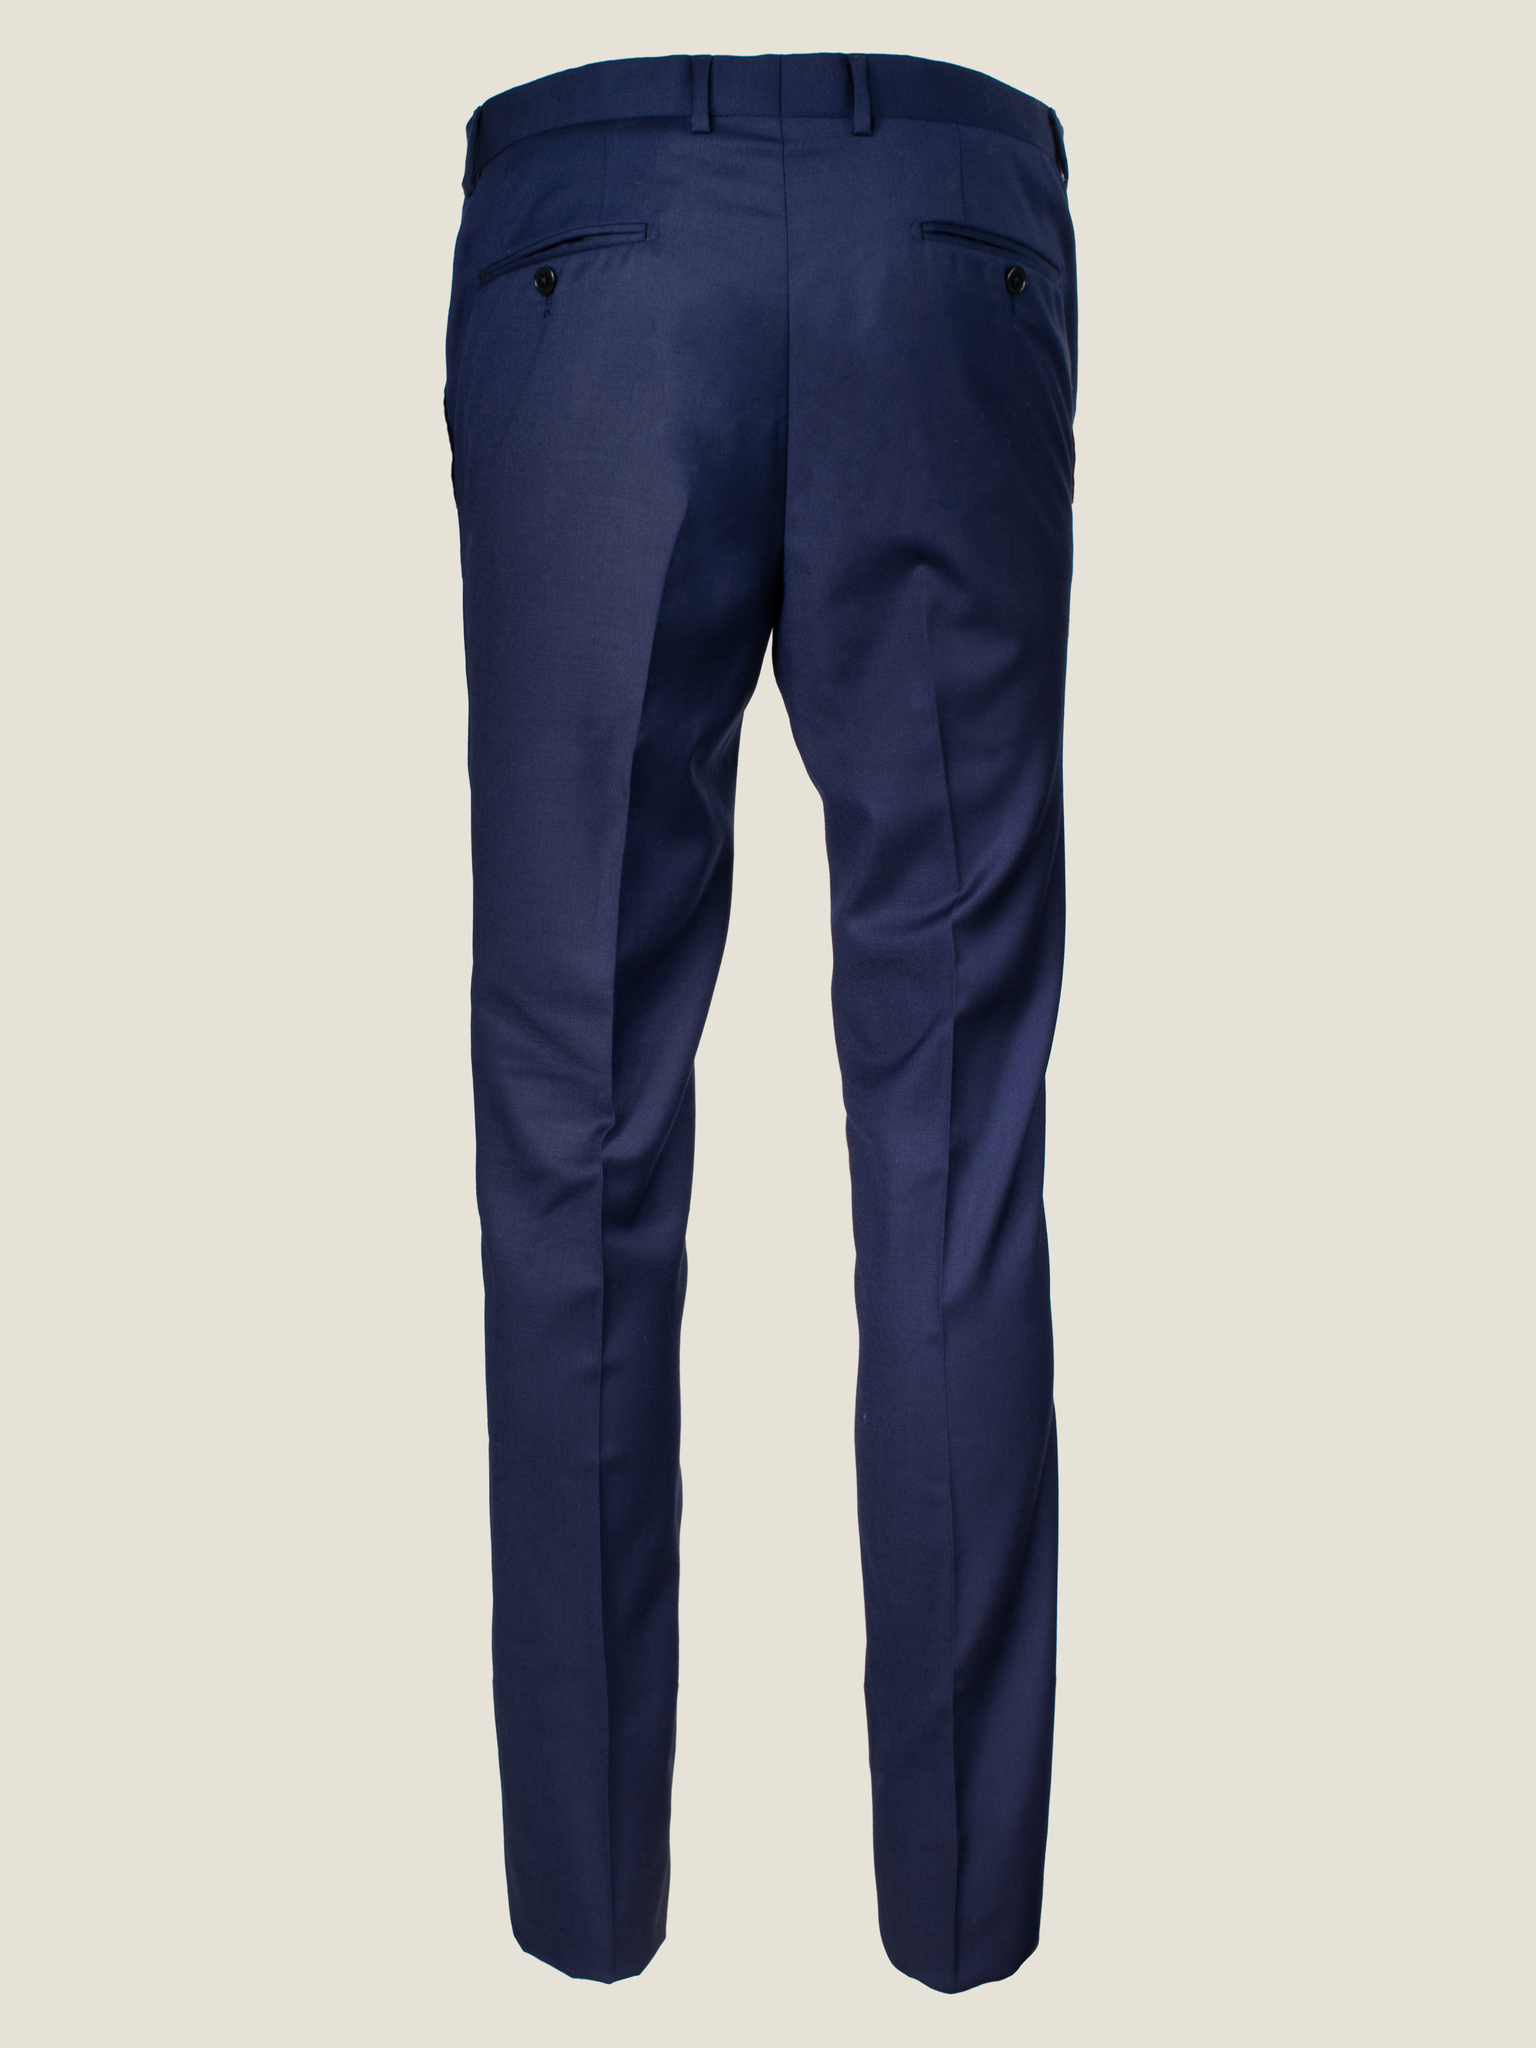 Essential Navy Suit Trouser